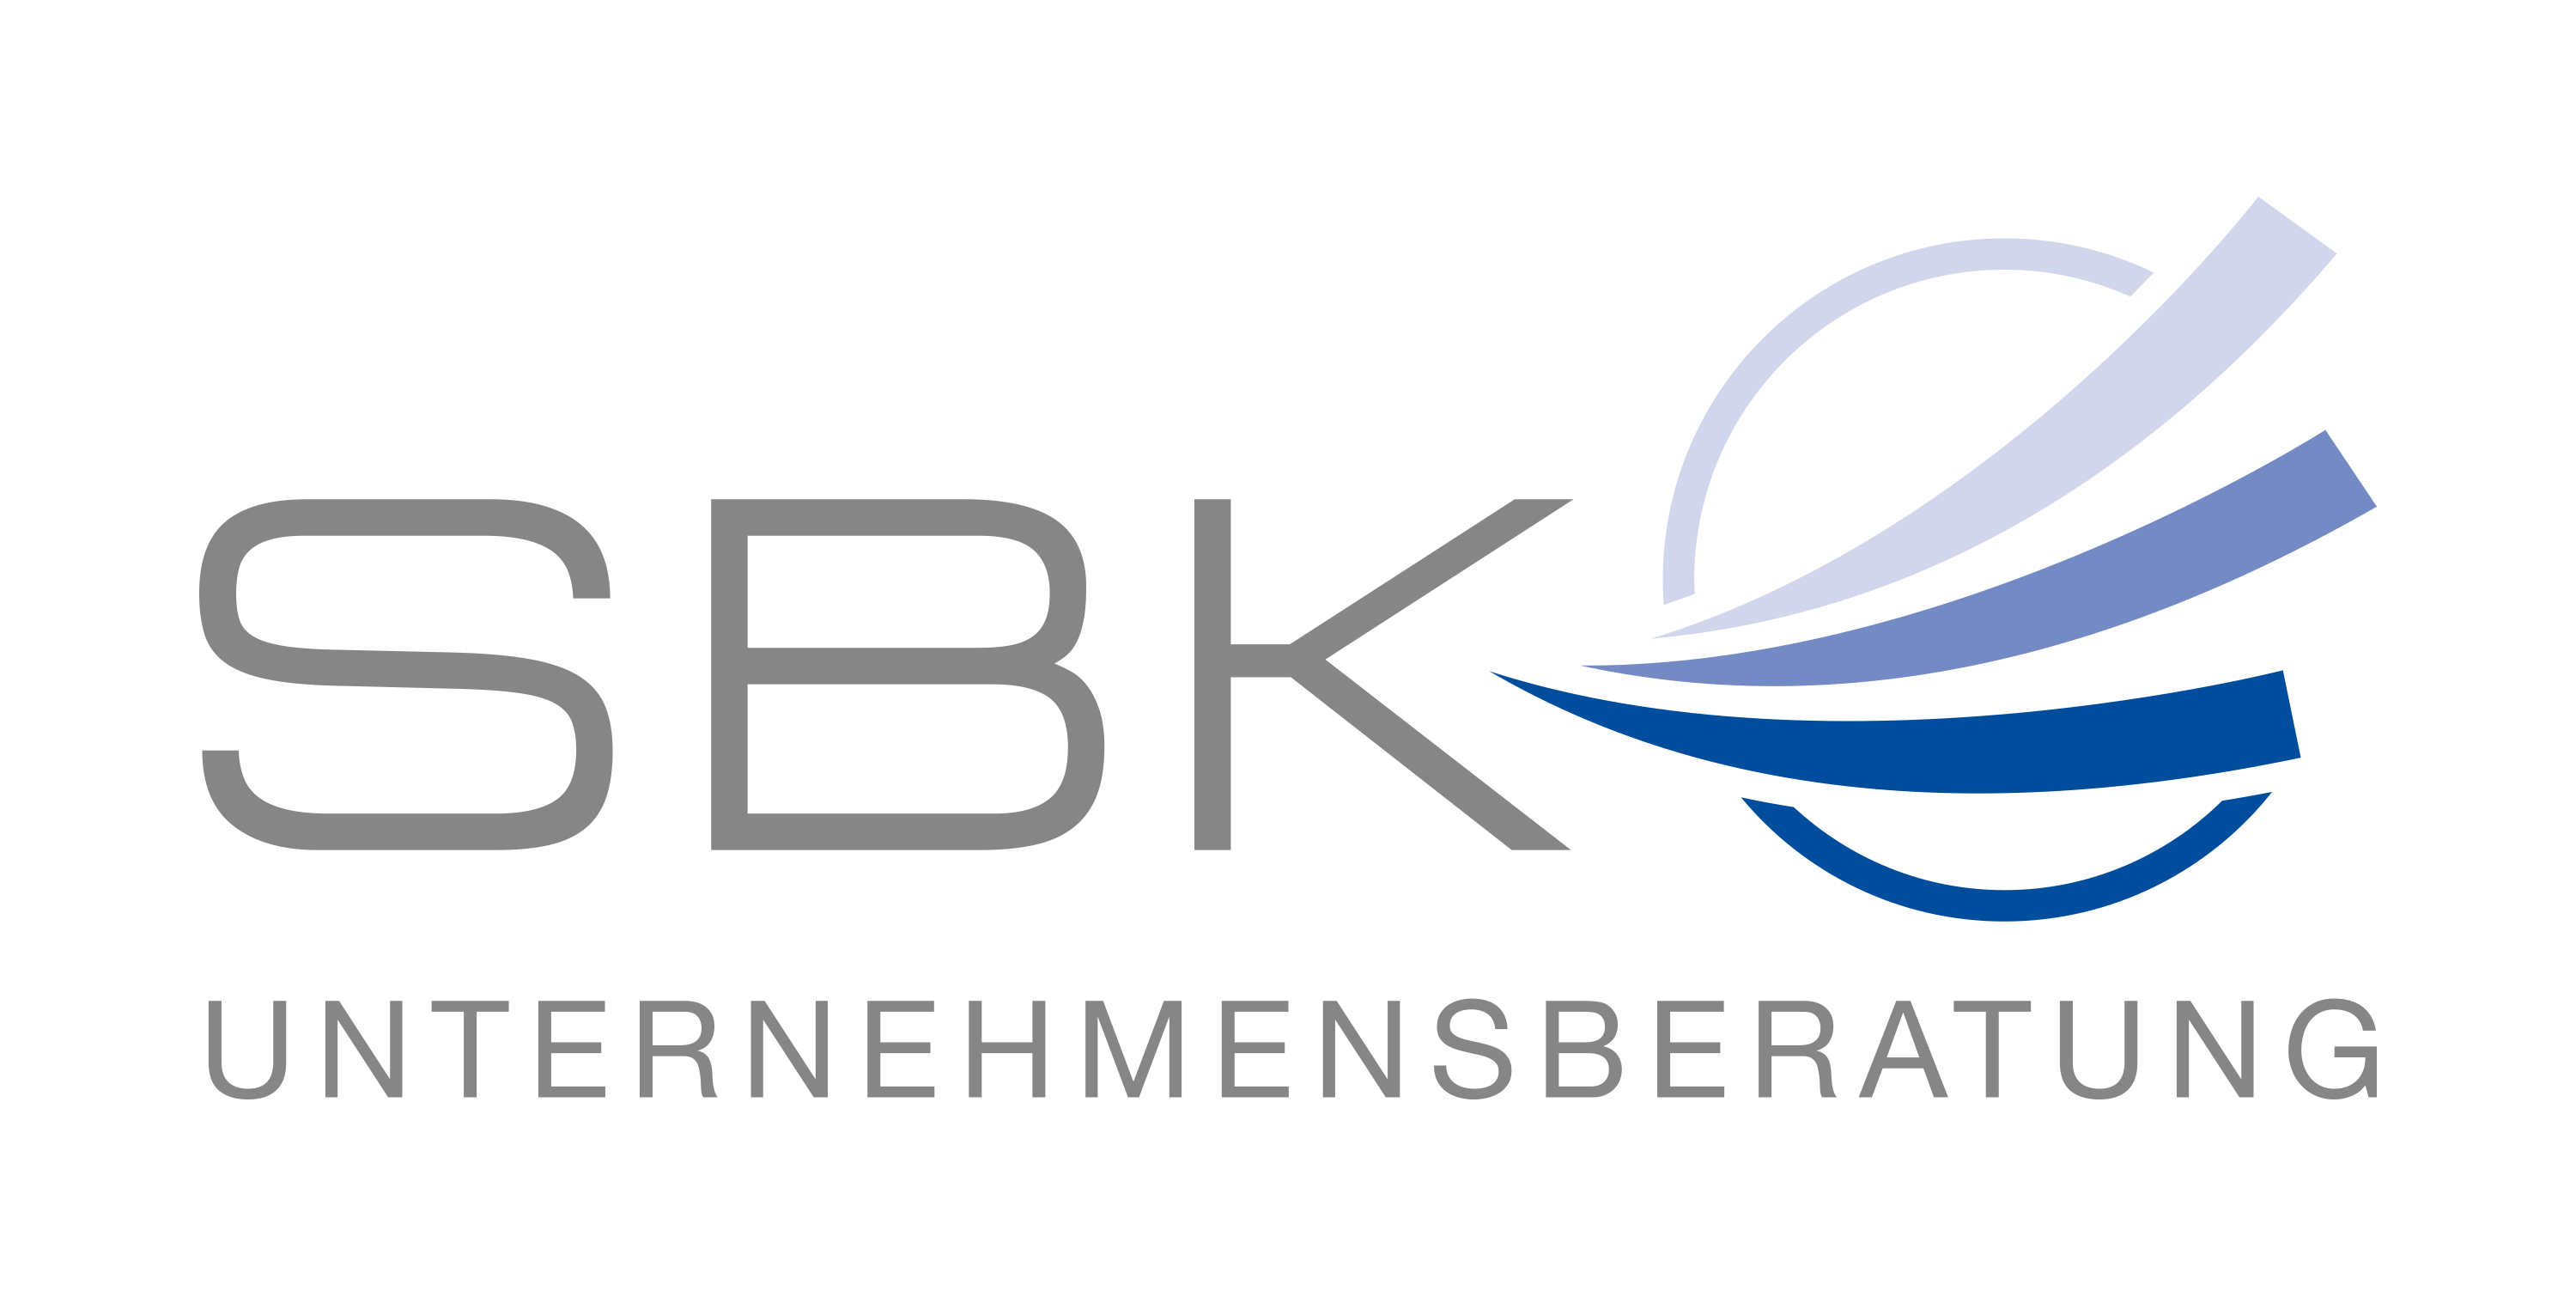 SBK-Unternehmensberatung - Unternehmensberatung für den Mittelstand